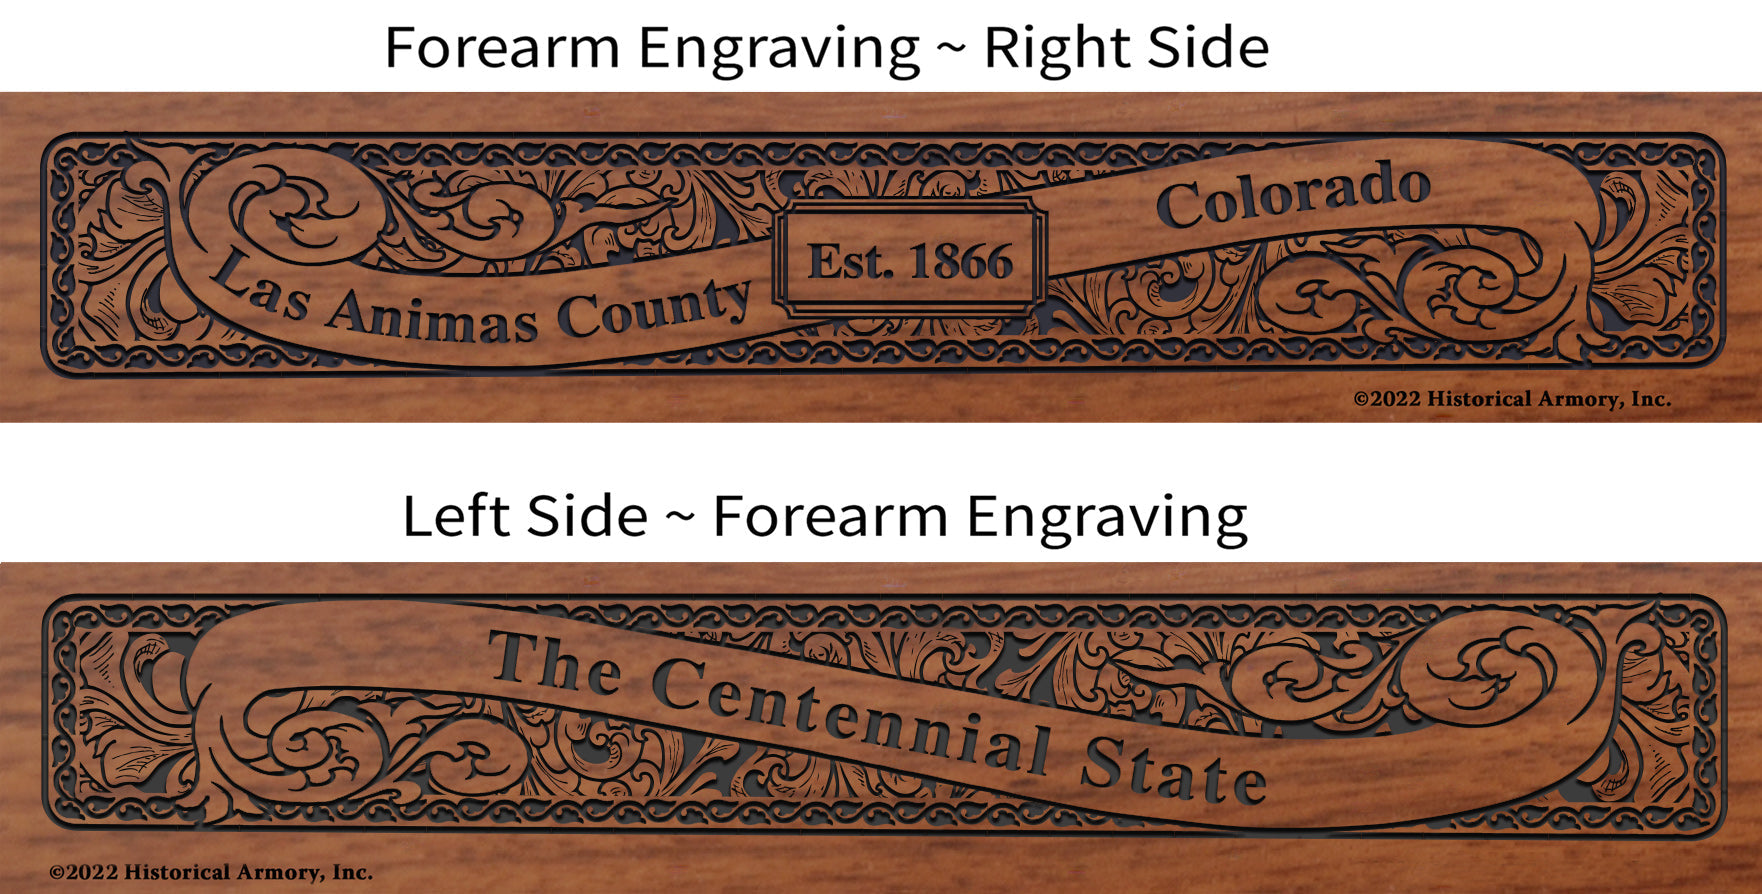 Las Animas County Colorado Engraved Rifle Forearm